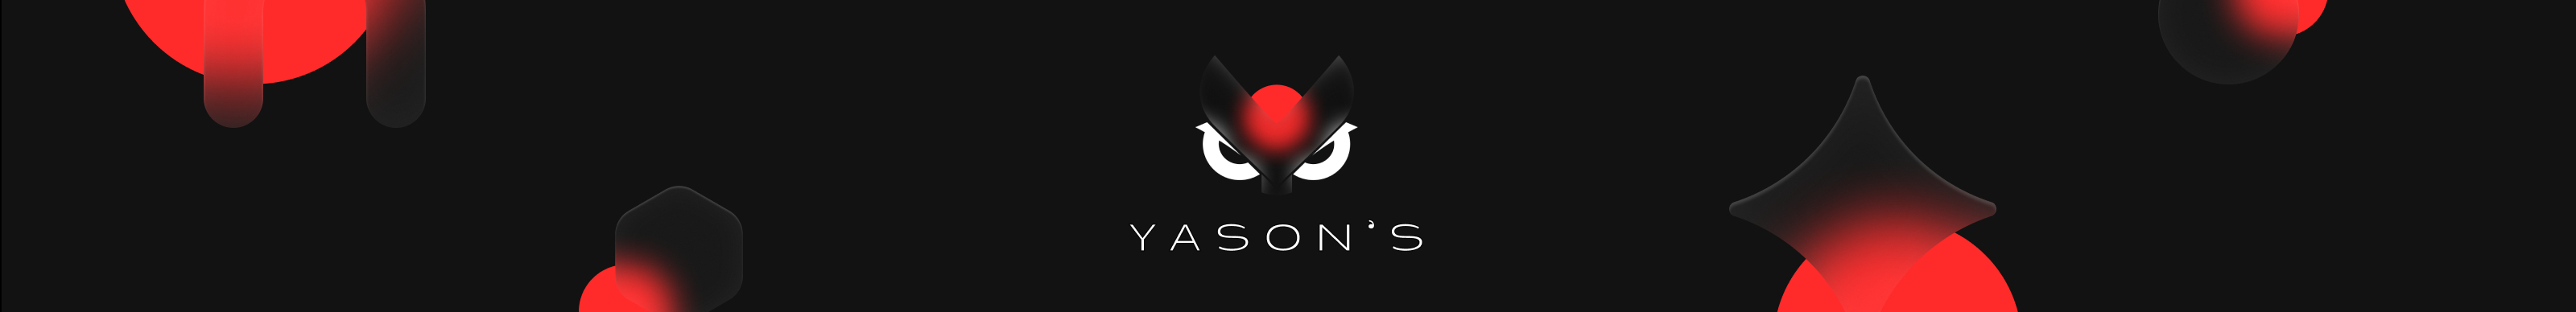 Banner de perfil de Yason's Design